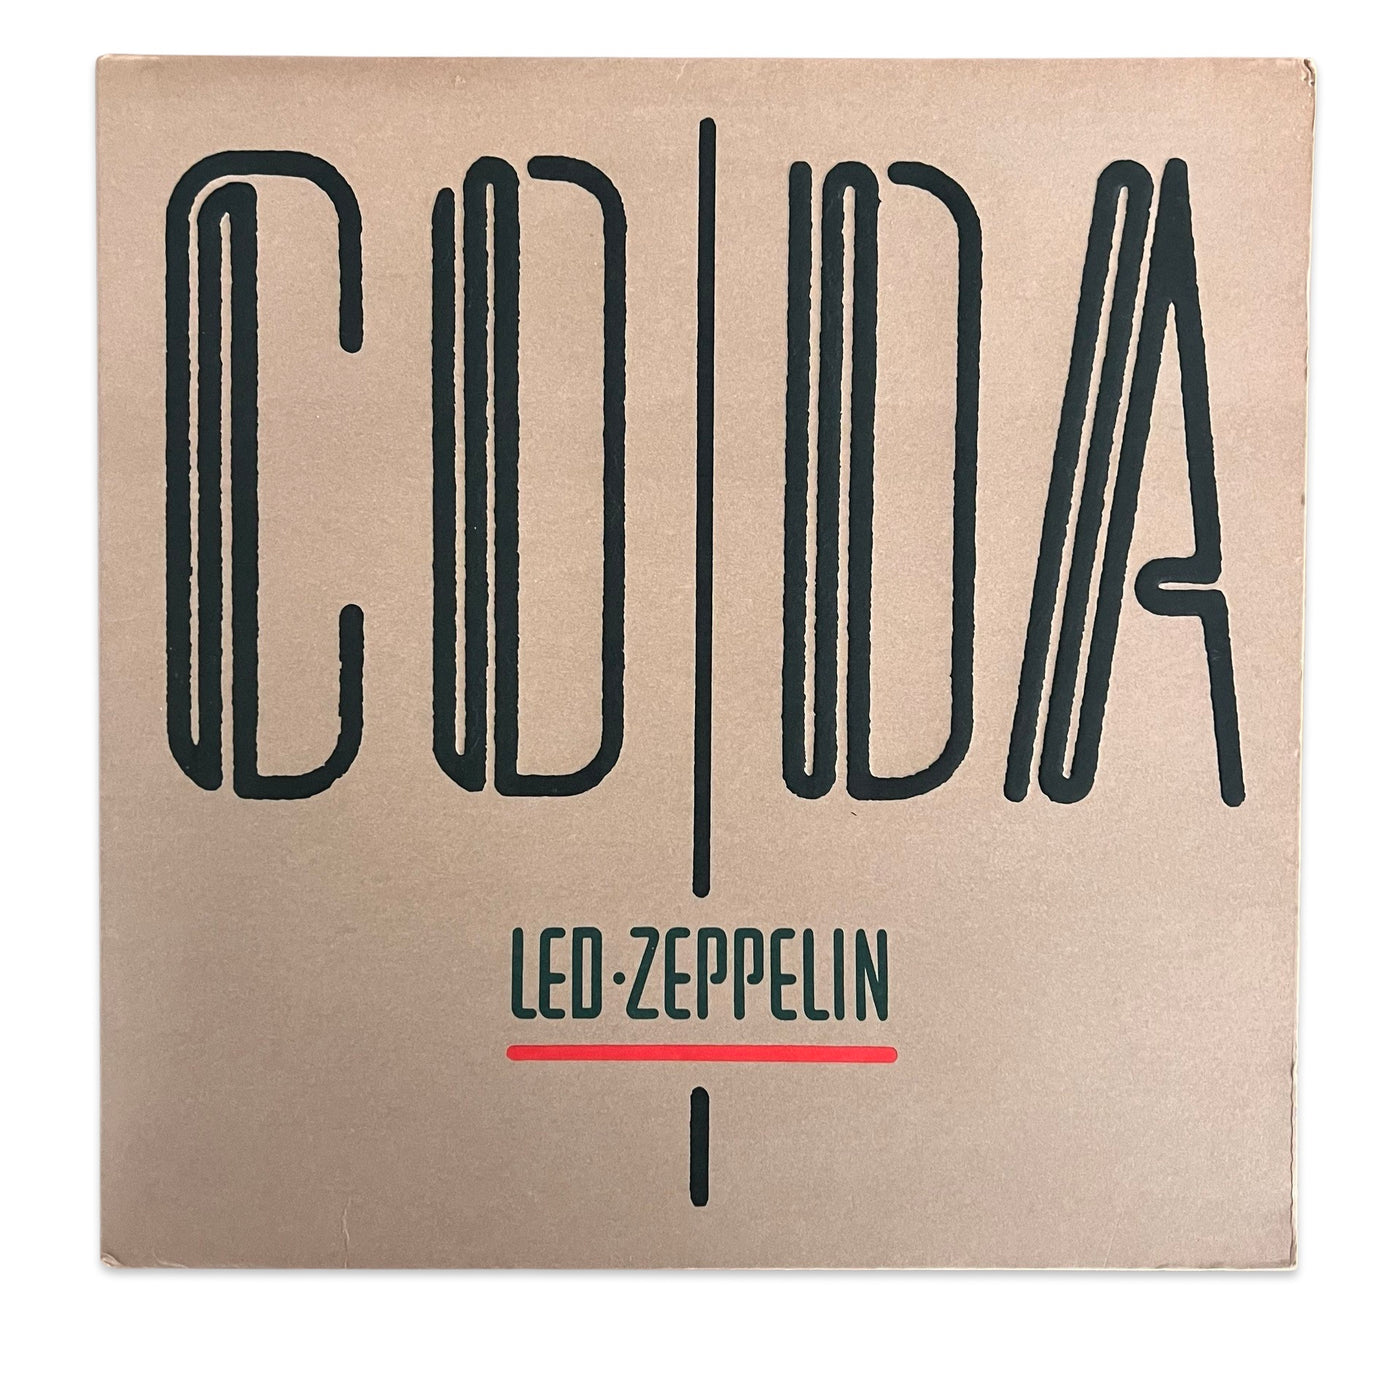 Led Zeppelin – Coda (1982 Specialty Pressing, Gatefold)